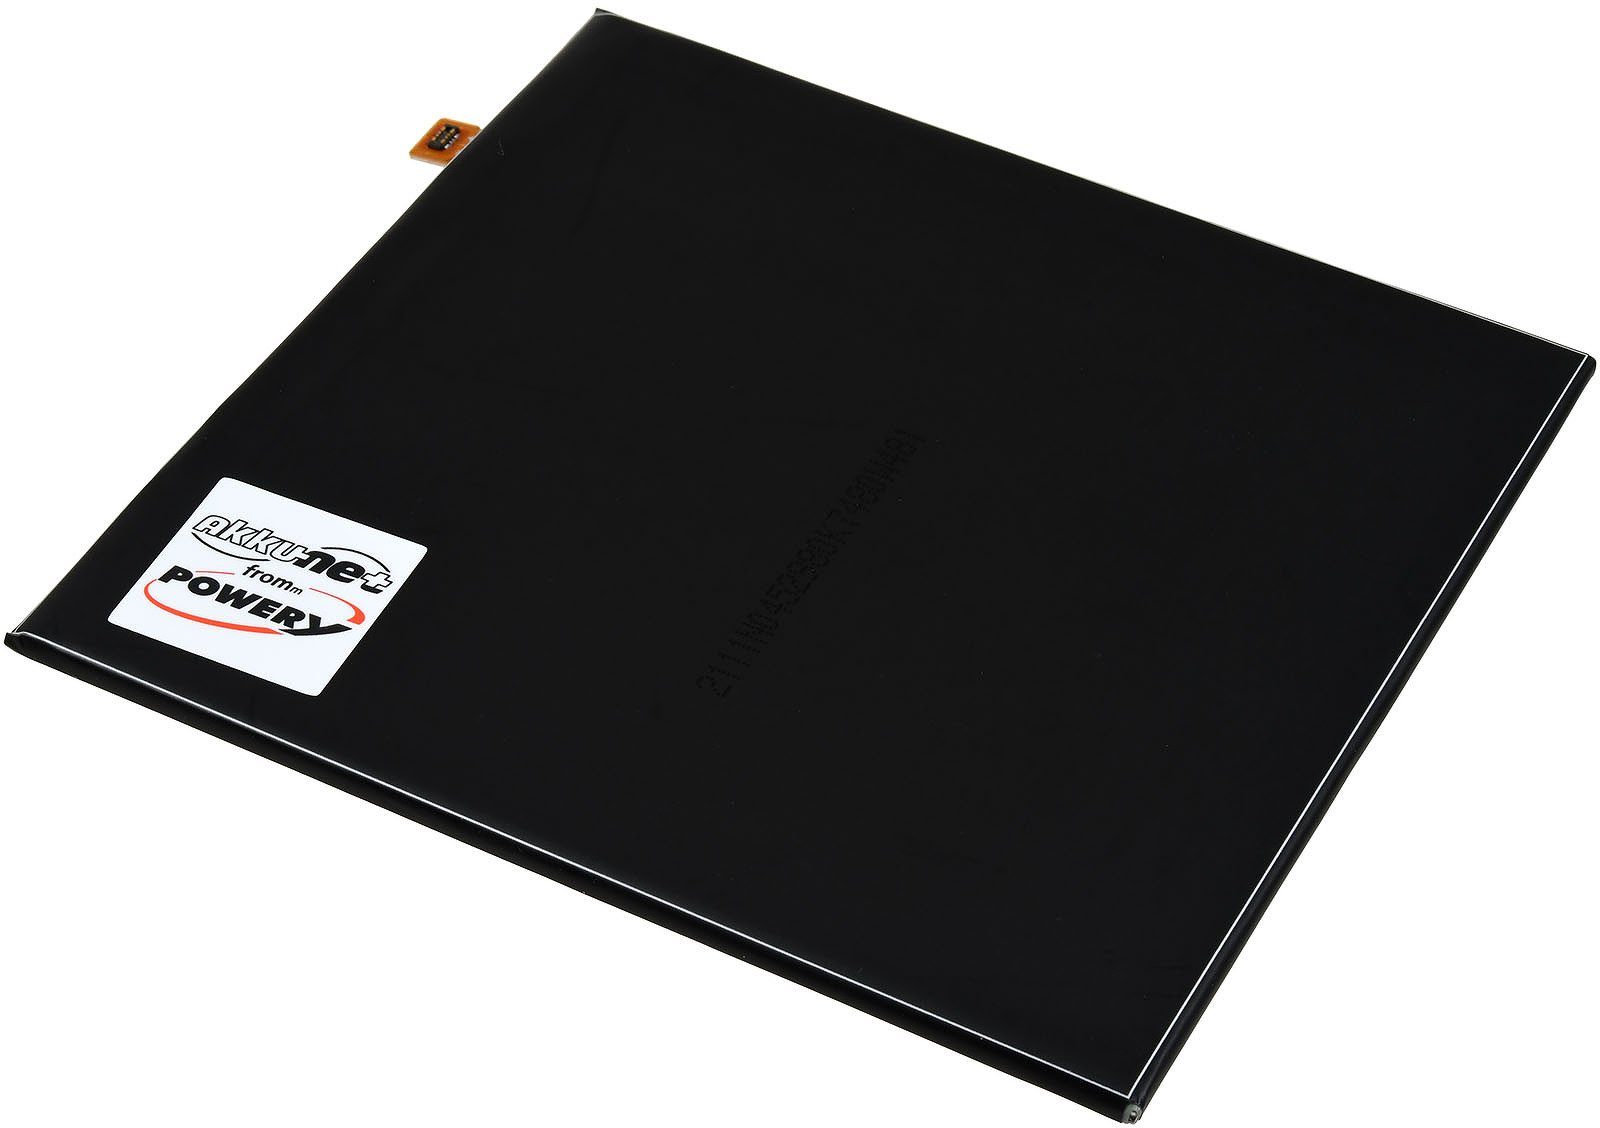 Laptop-Akku für Galaxy Powery 4800 8.4 (3.85 V) A Akku mAh Tab 2020 Samsung